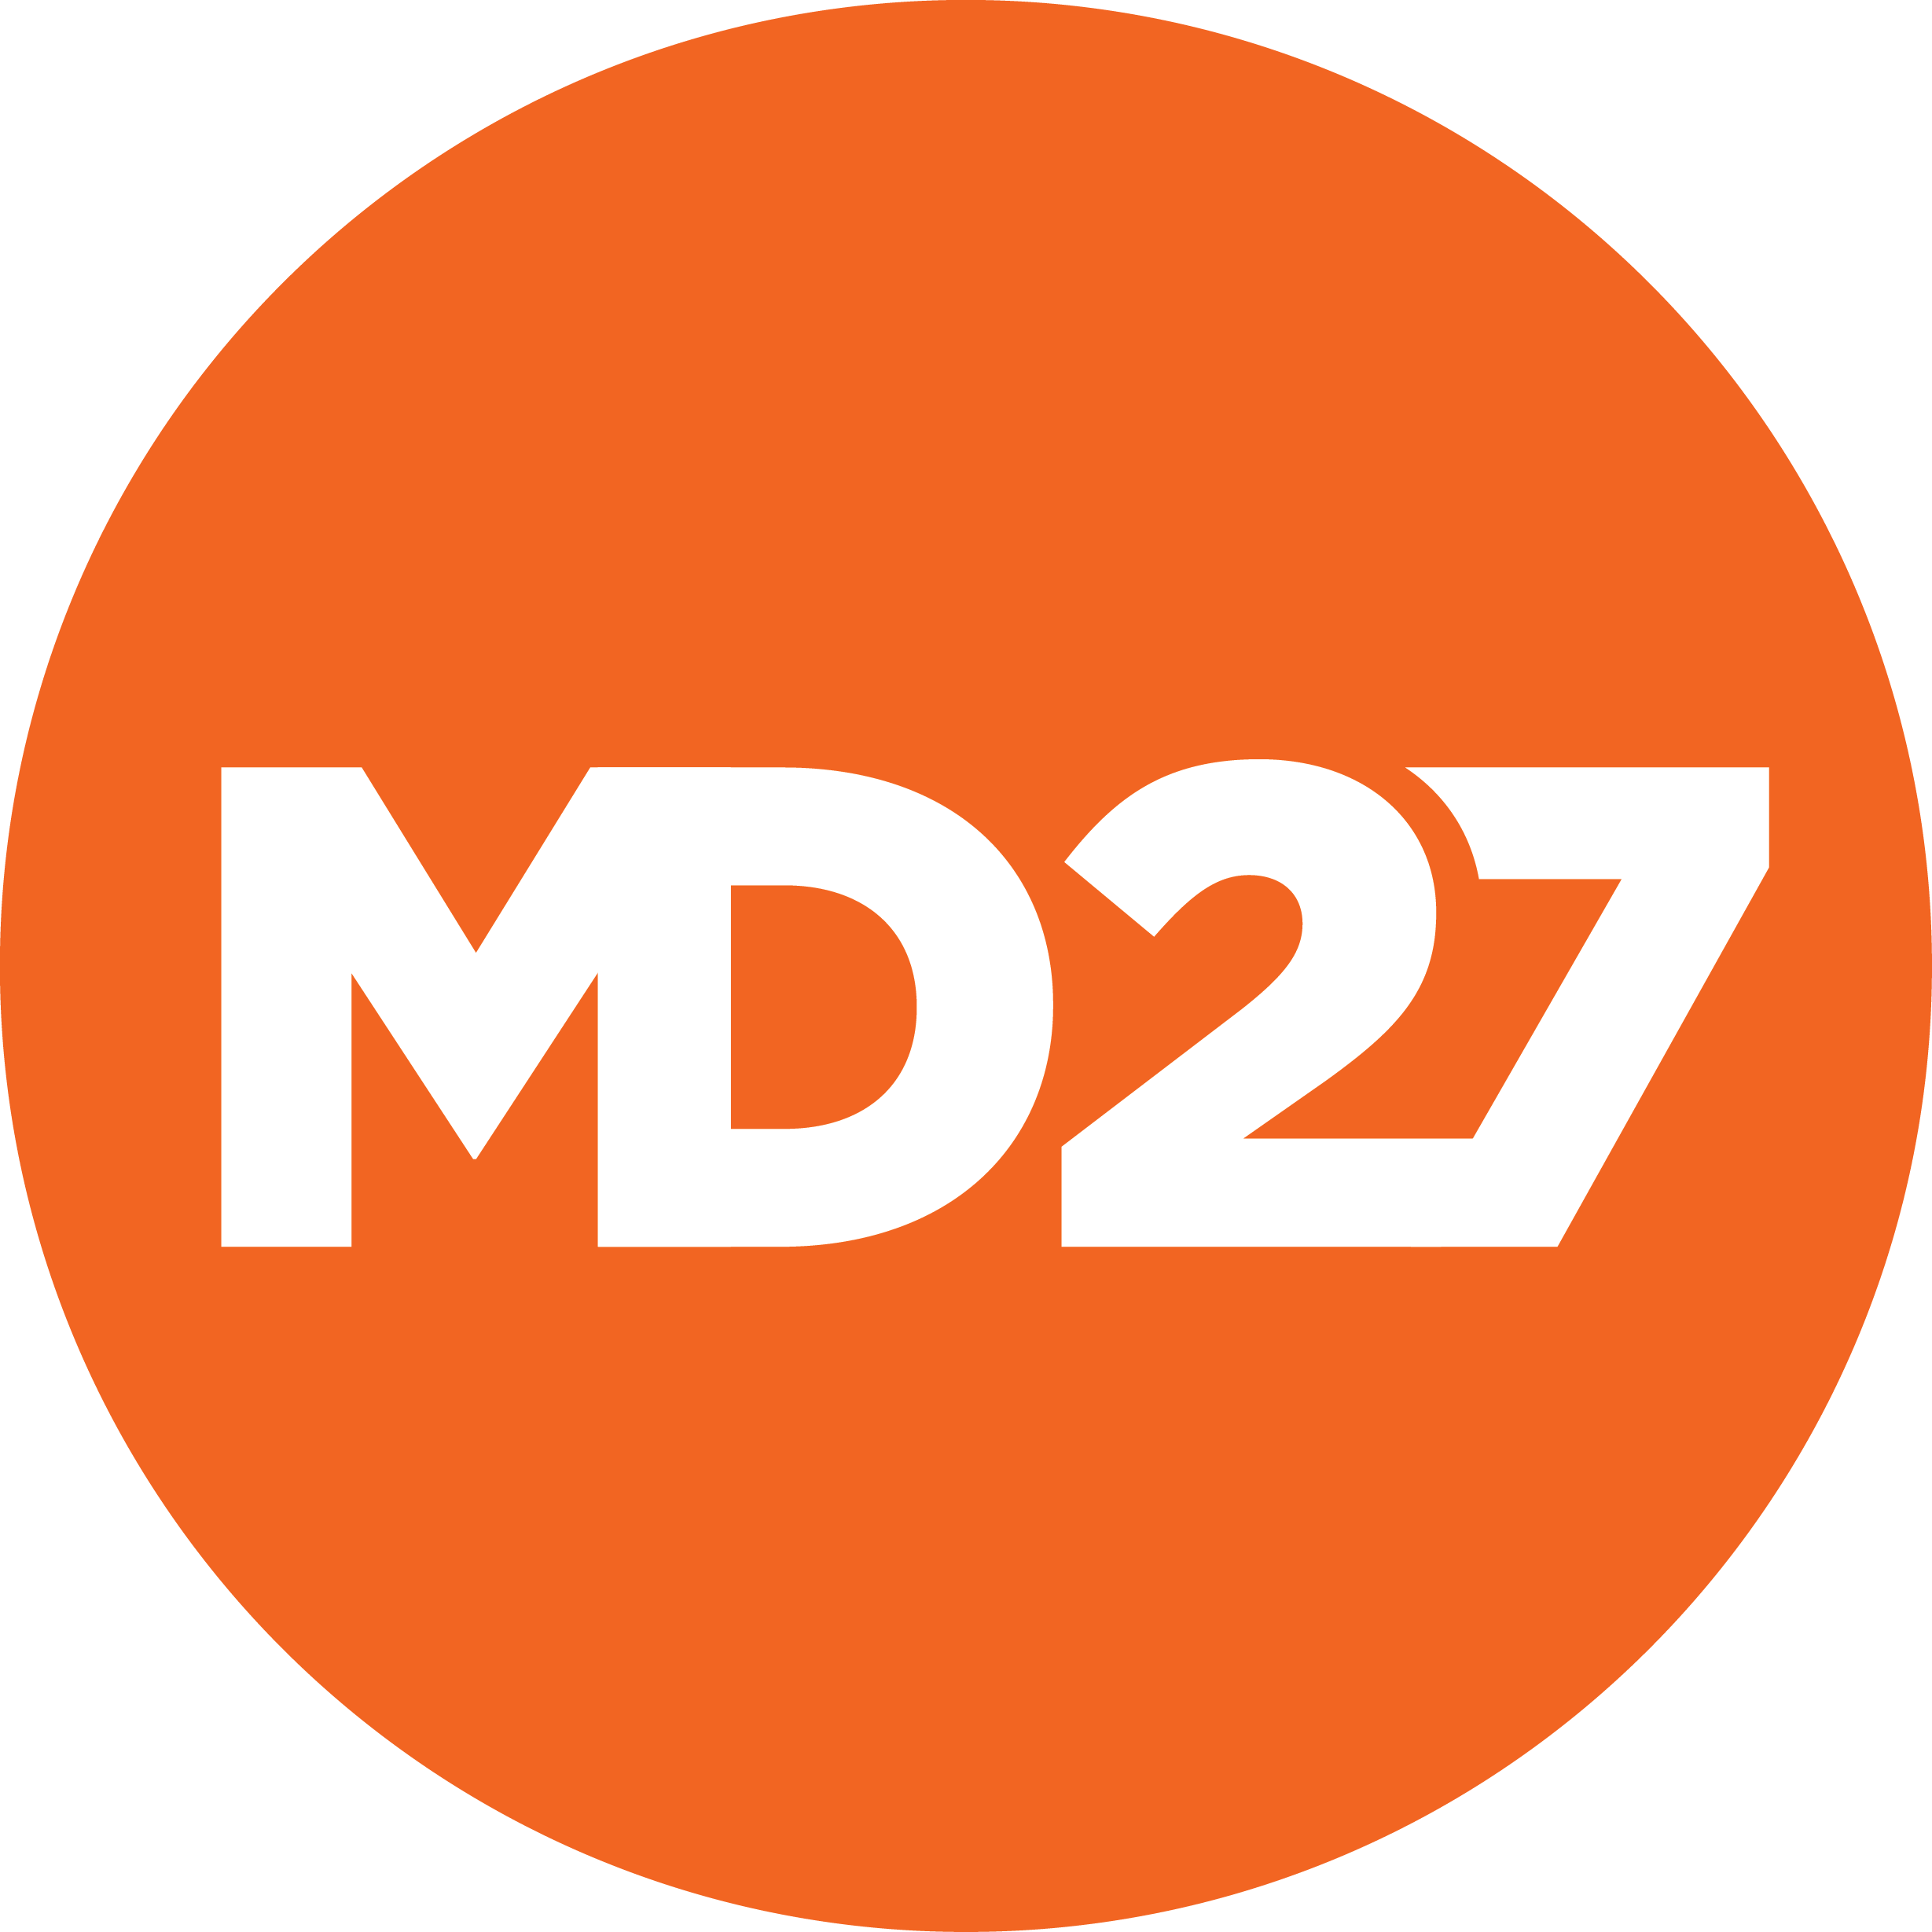 md27 logo